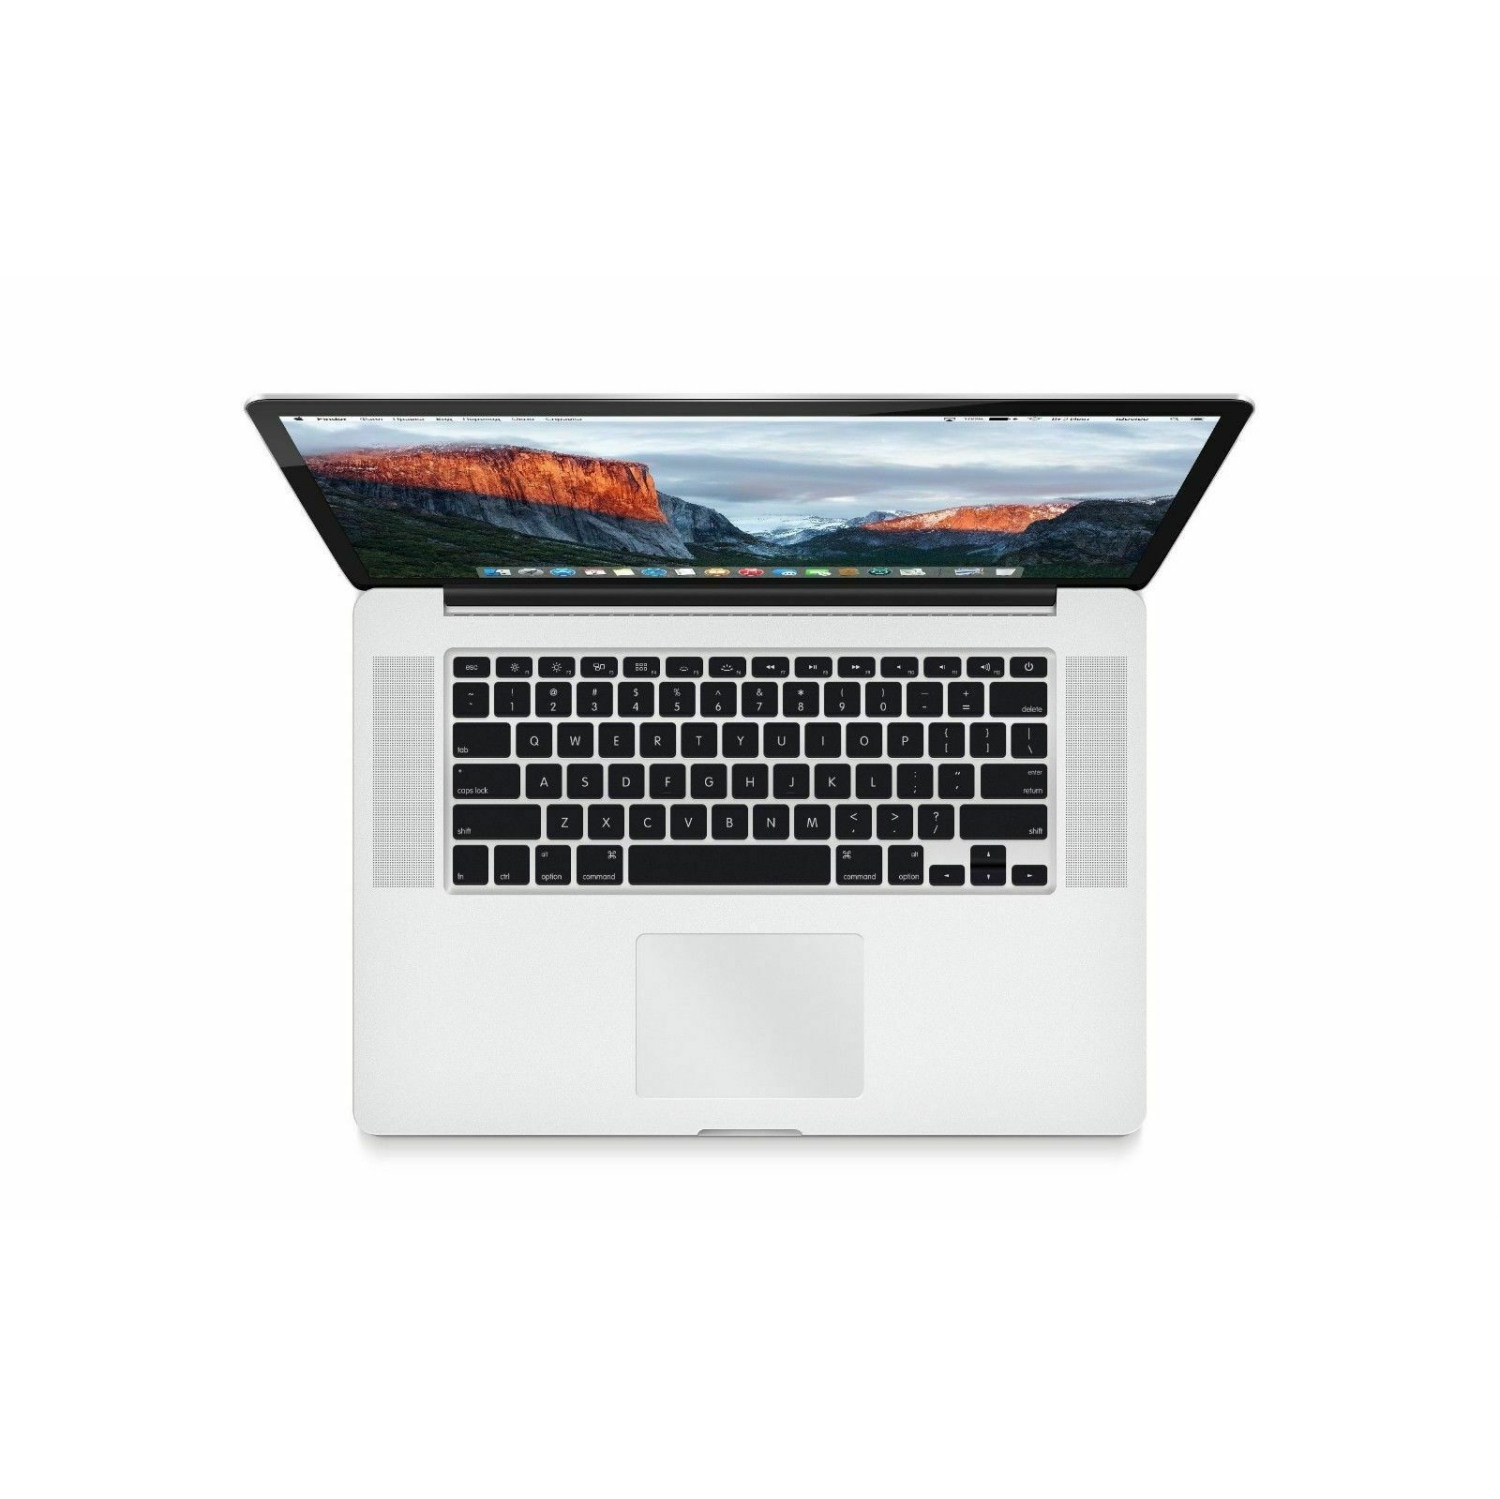 Refurbished (Good) - MacBook Pro Retina 15-inch 2015